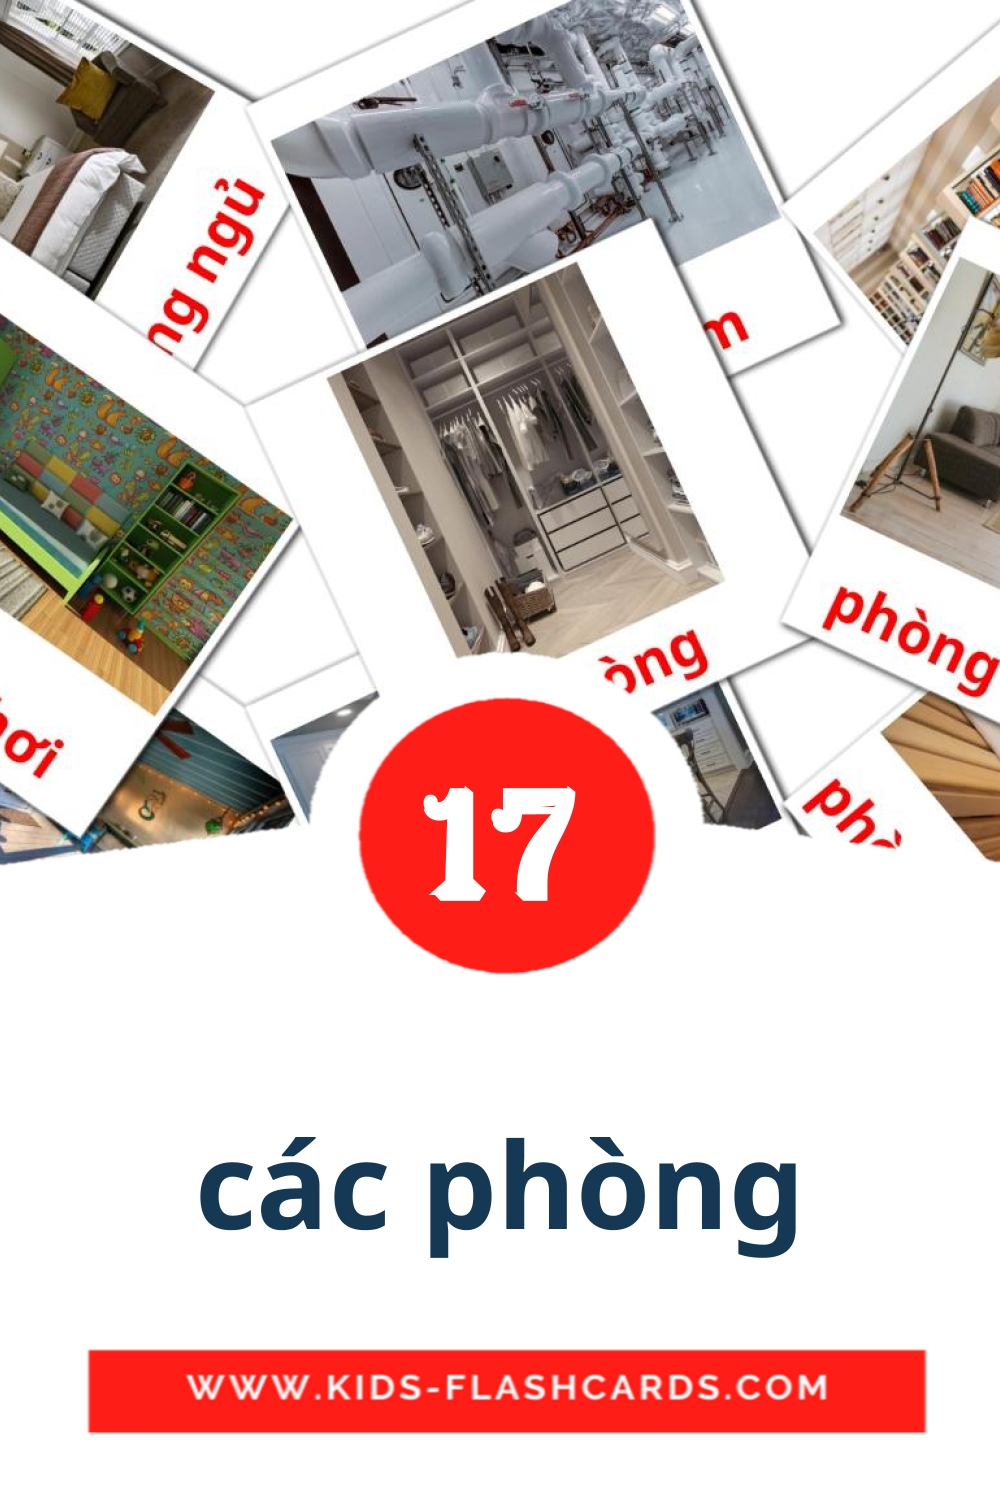 17 carte illustrate di các phòng per la scuola materna in vietnamita